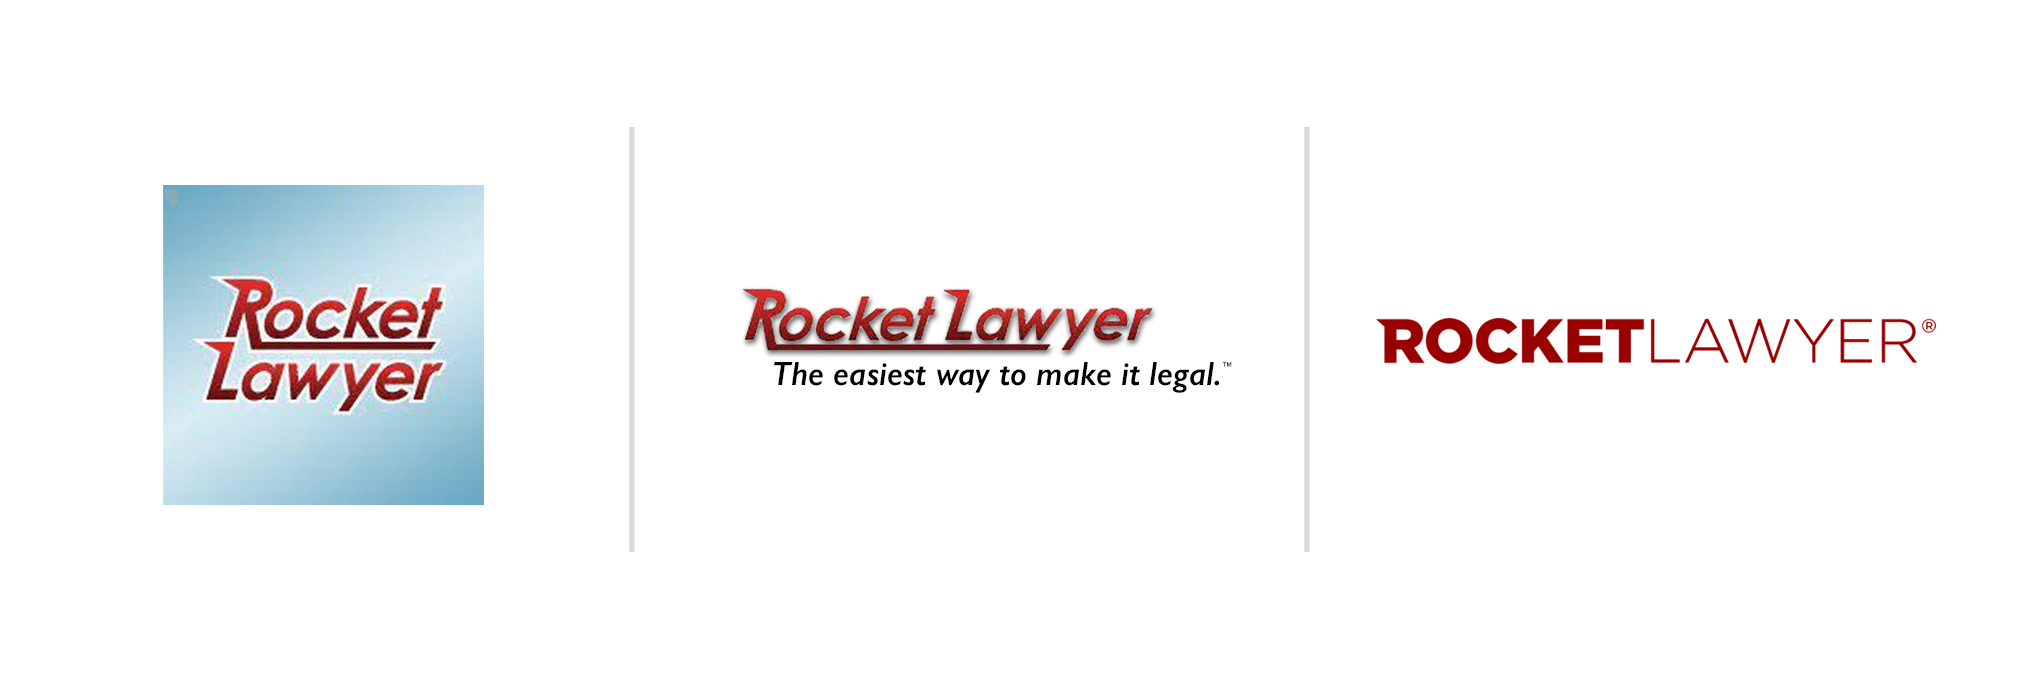 rocket-lawyer-logos-oldandnew